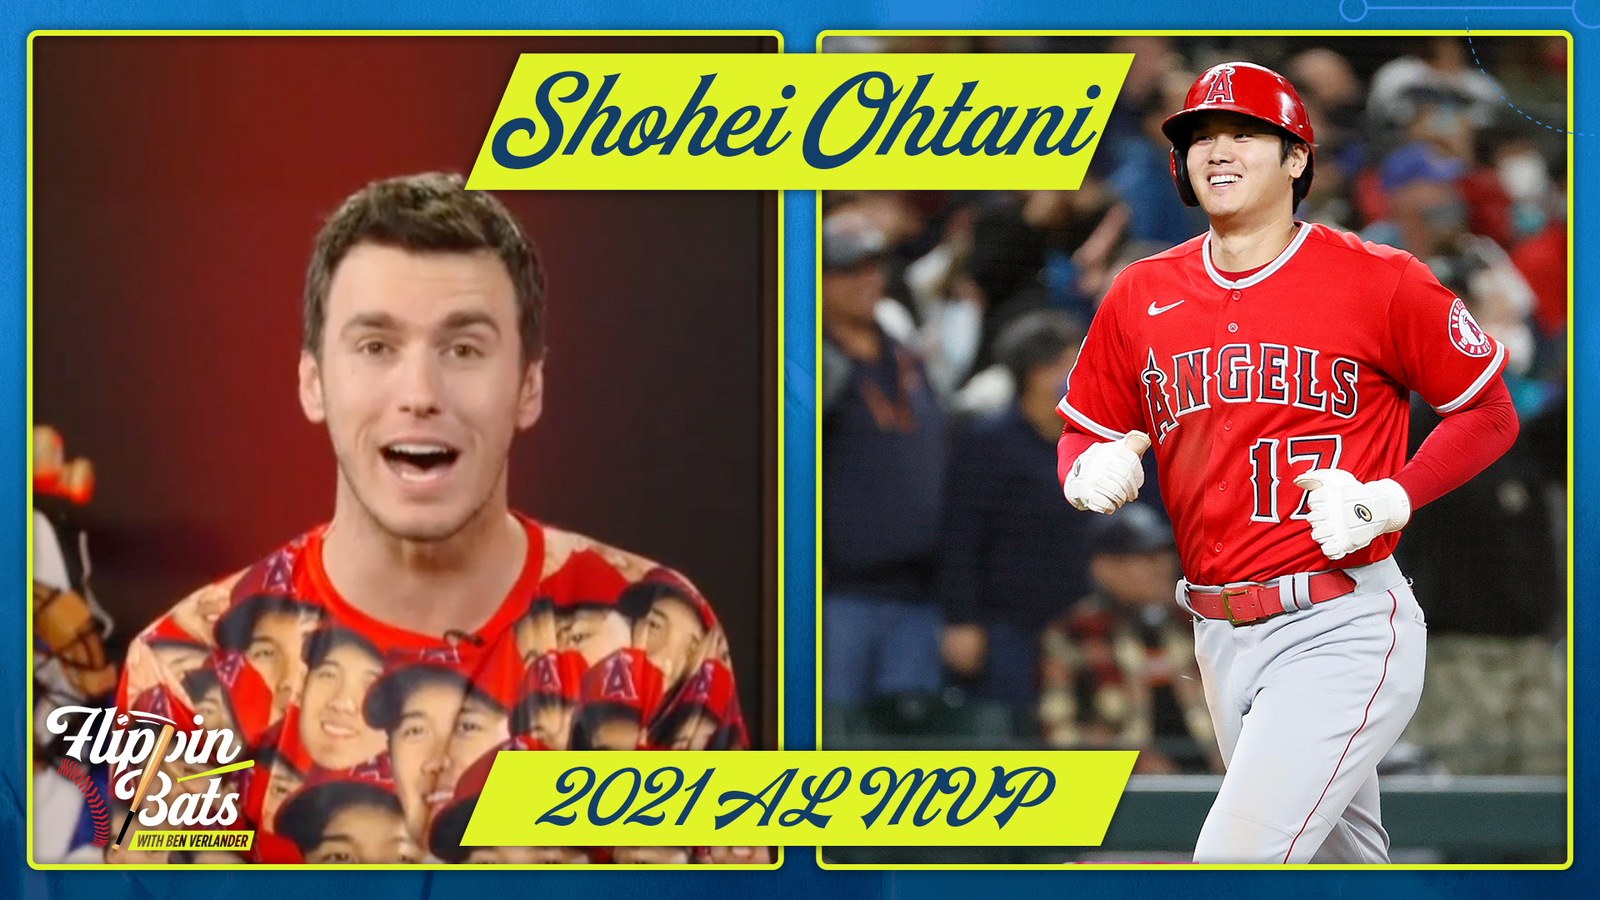 Shohei Ohtani is the unanimous AL MVP